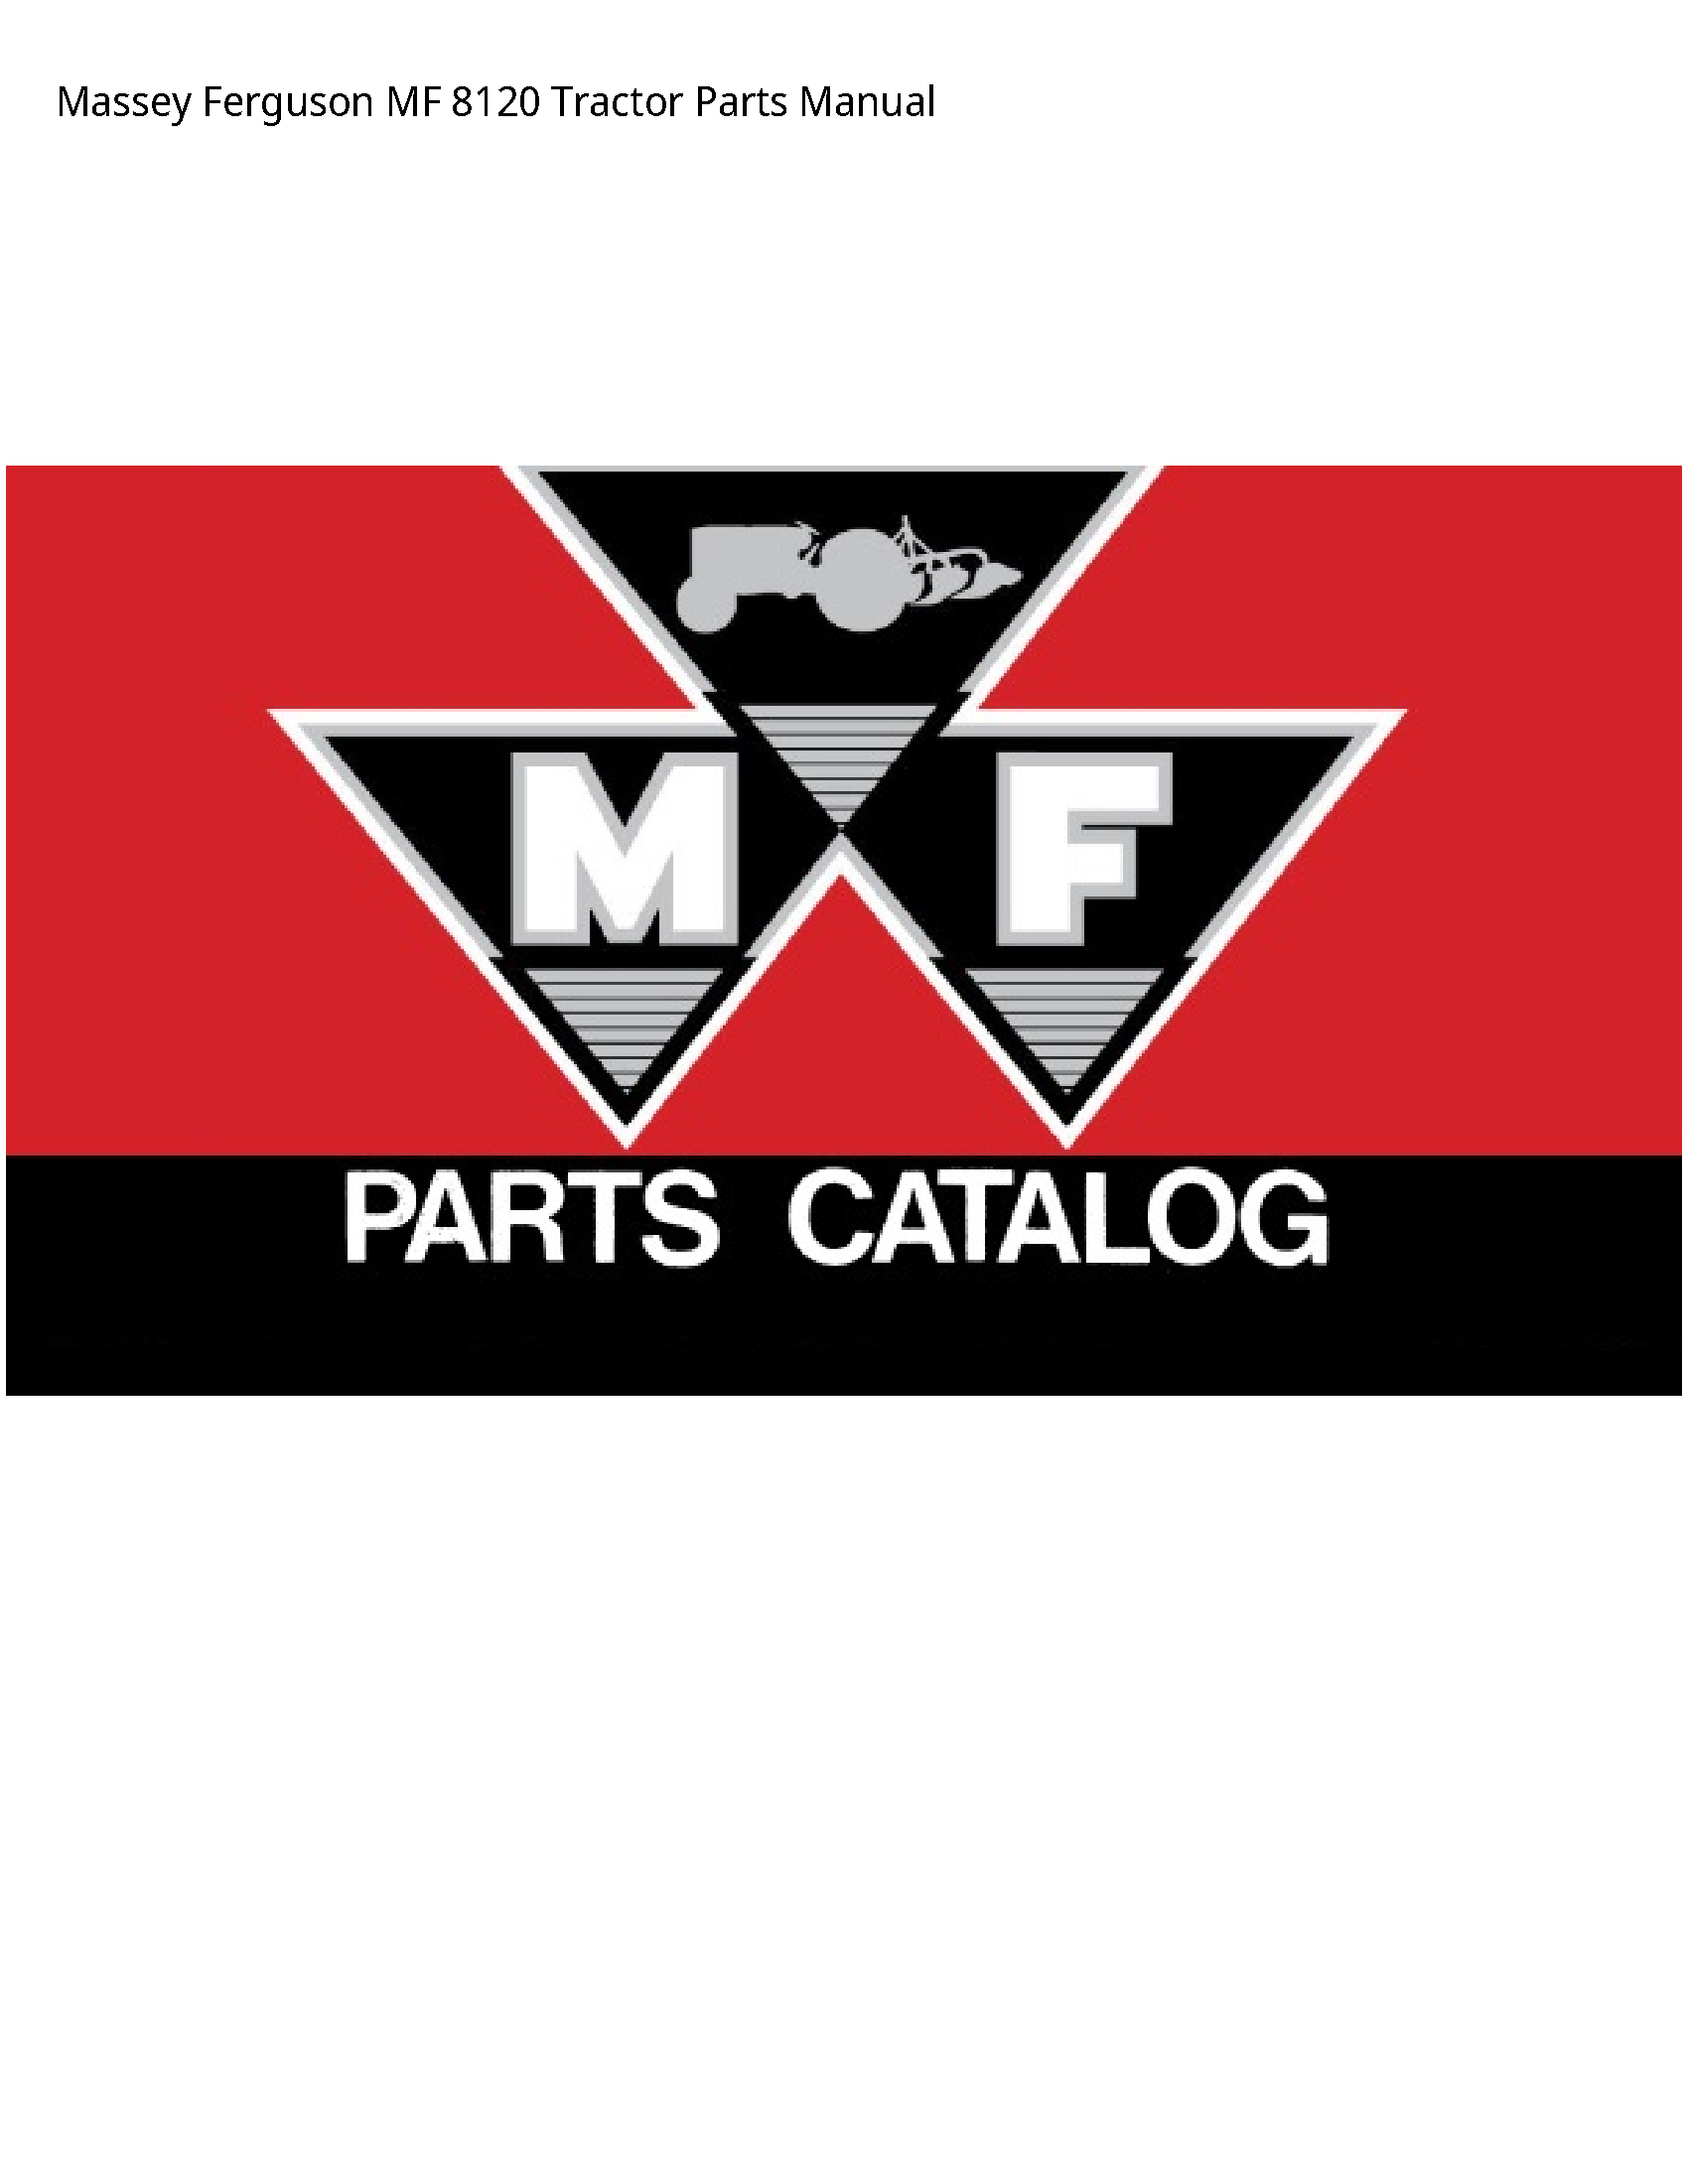 Massey Ferguson 8120 MF Tractor Parts manual